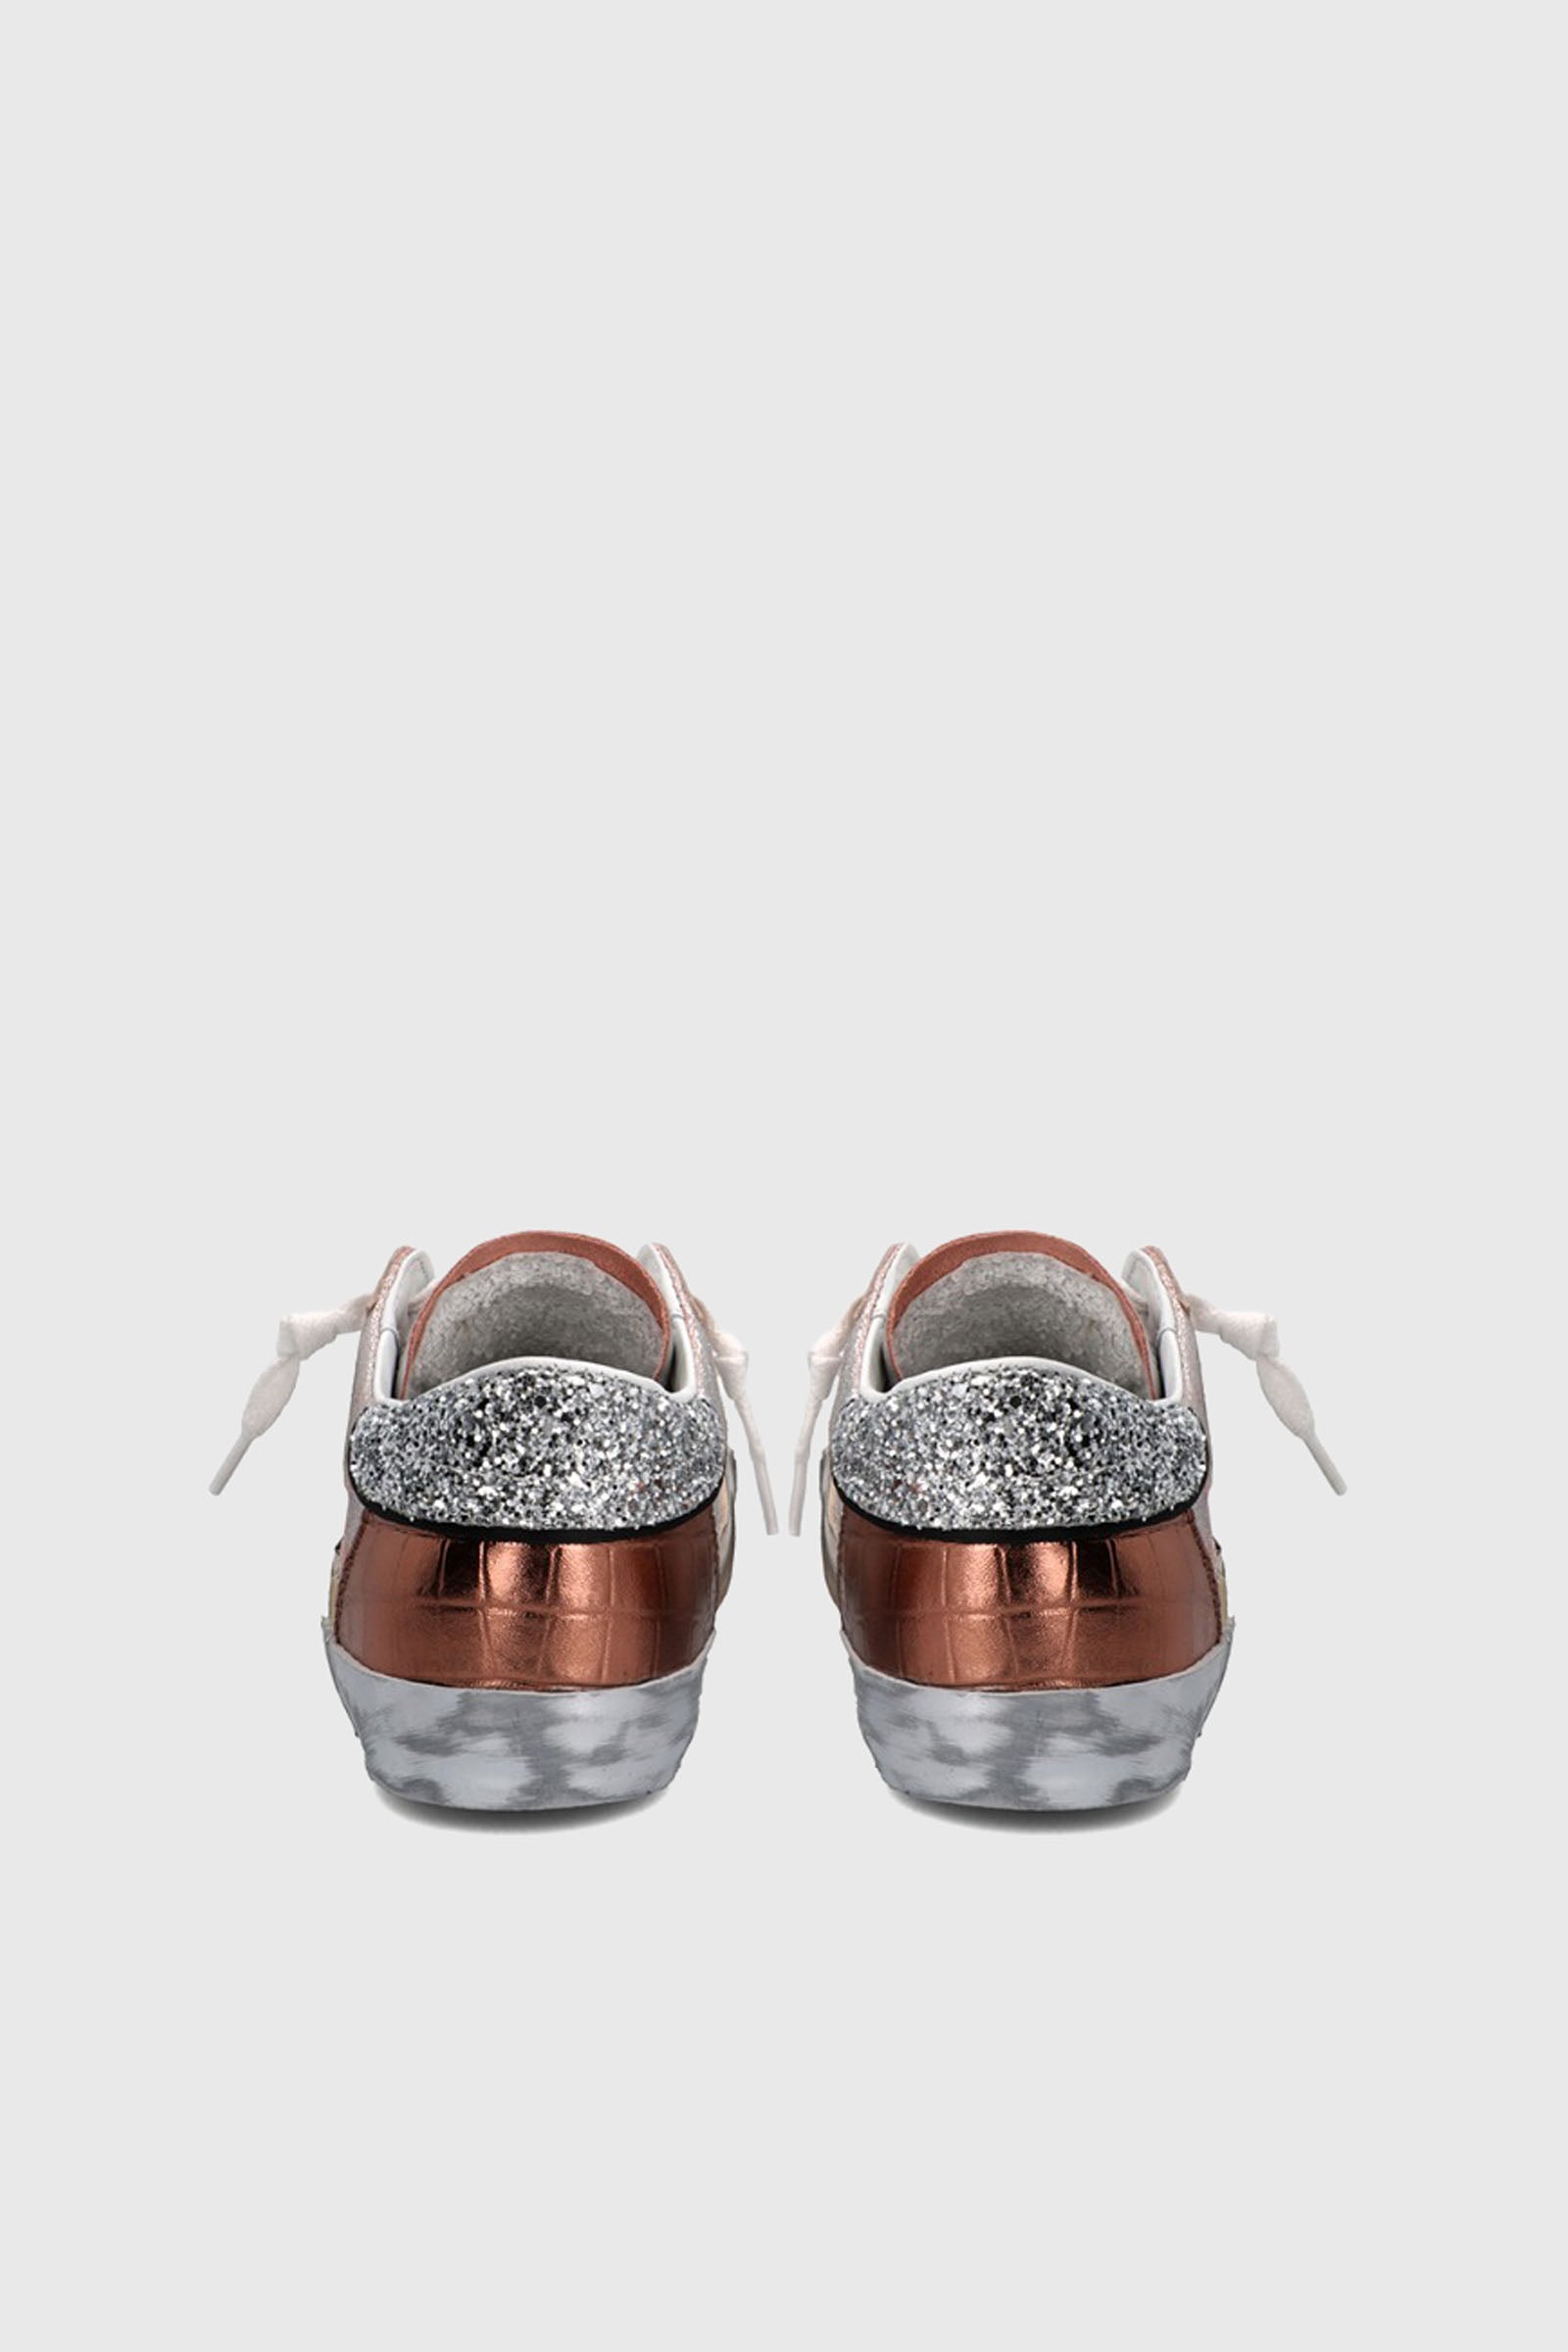 Philippe Model Sneakers PRSX Veau Croco Glitter, Pelle Bianco/Rosa - 4